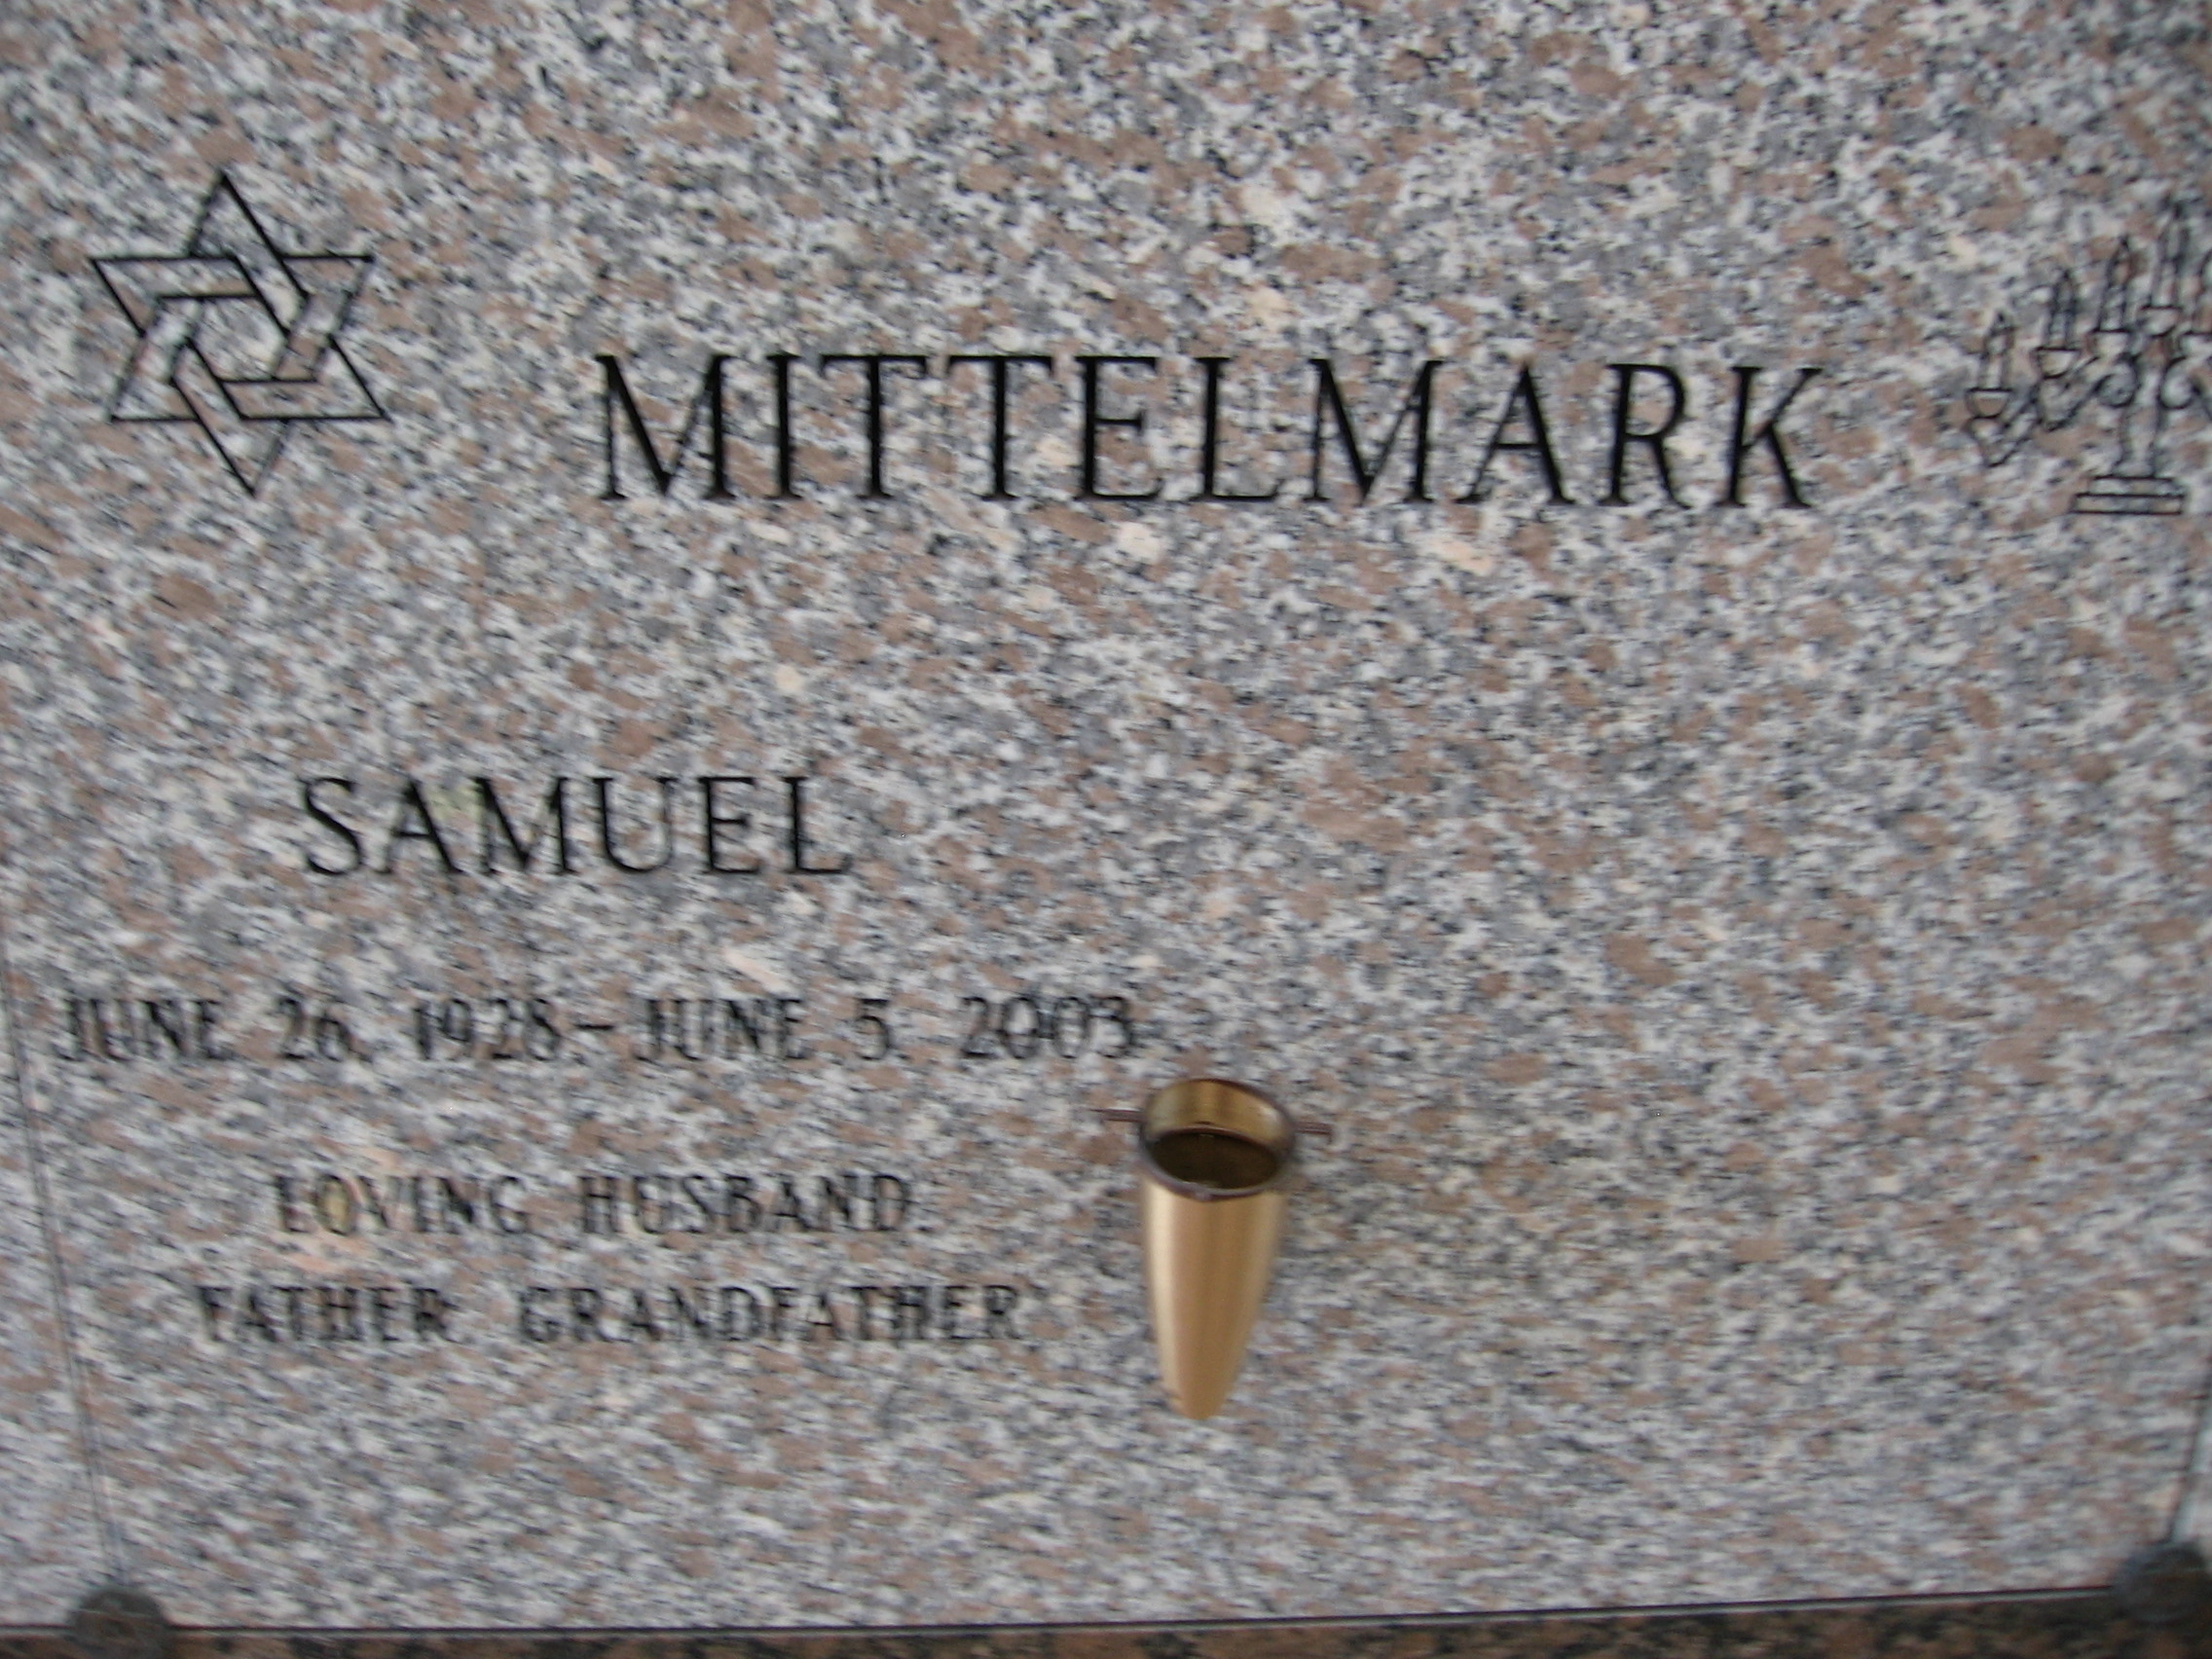 Samuel Mittelmark